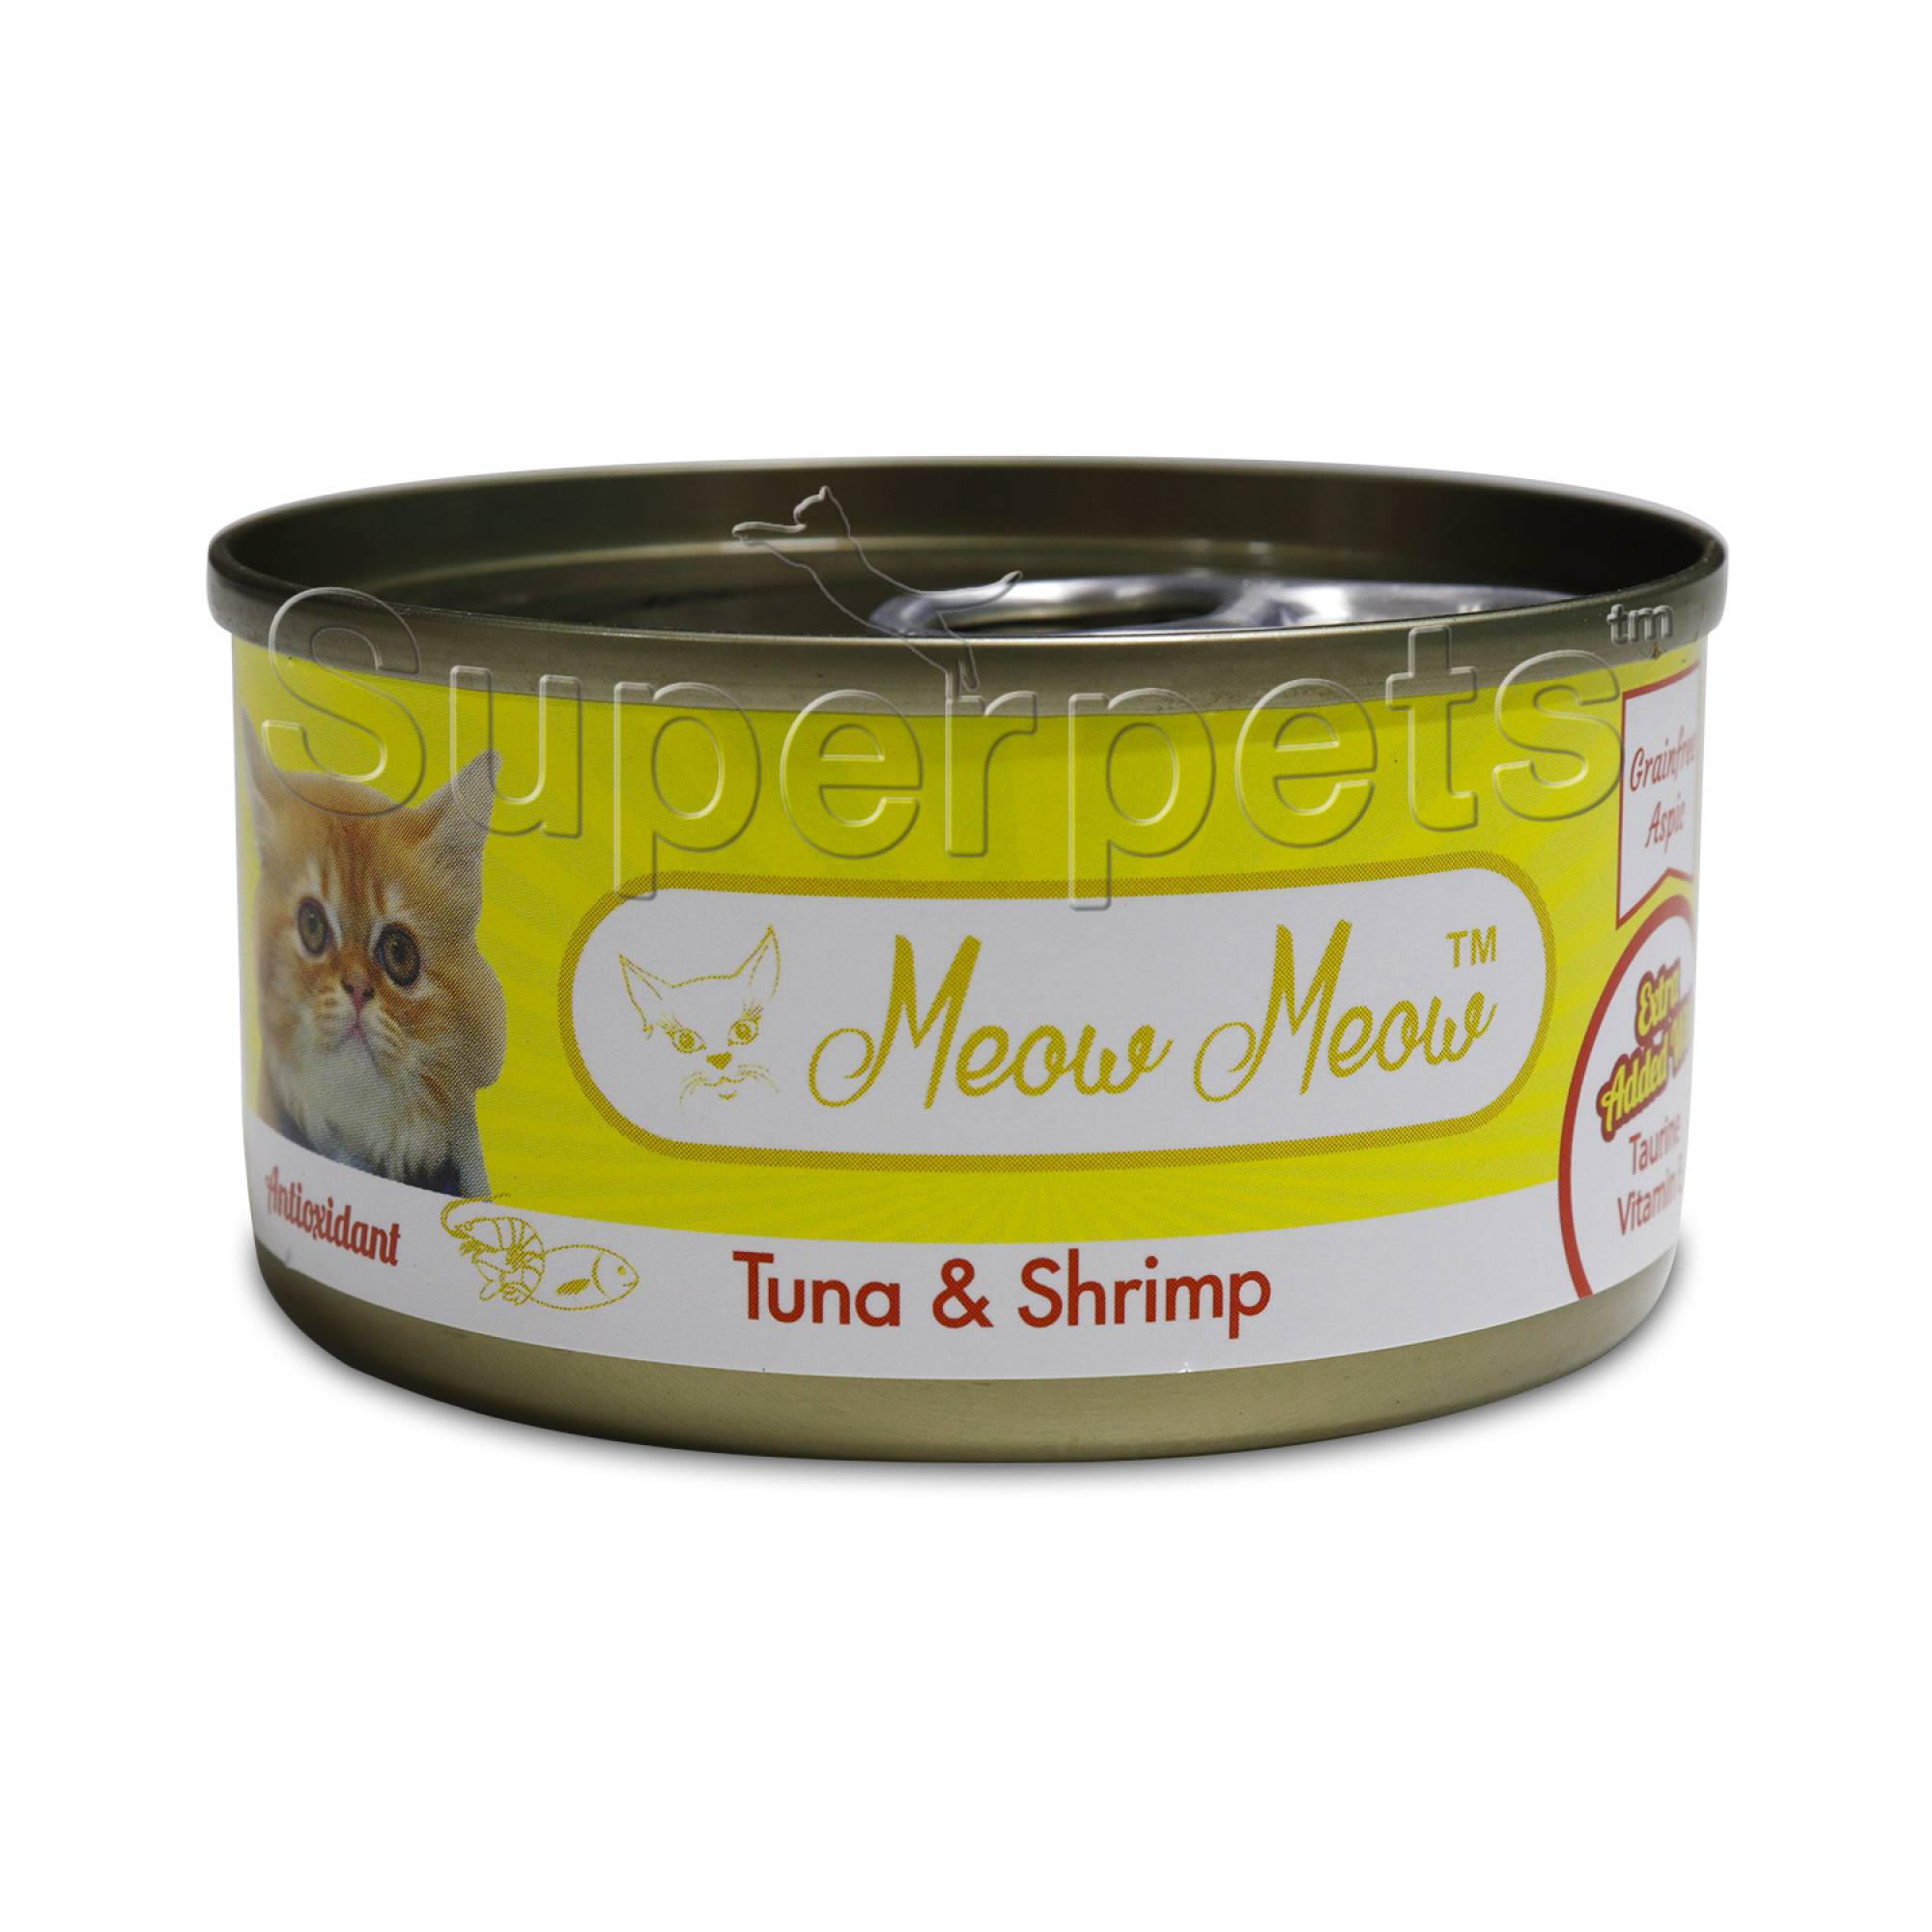 Meow Meow - Tuna & Shrimp - Grain Free 80g x 24pcs (1 carton)